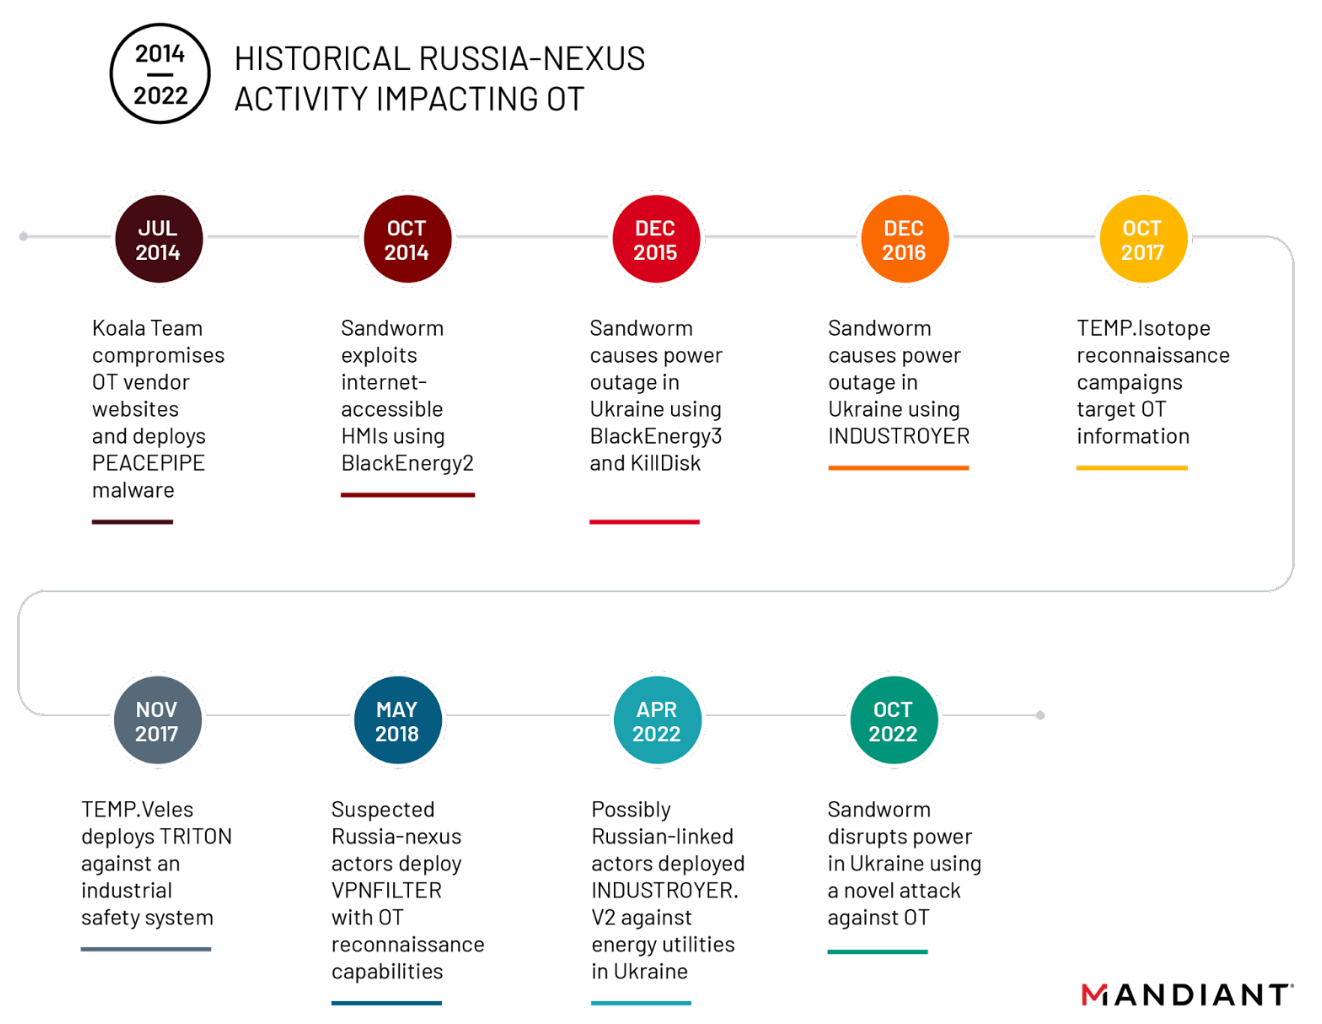 Historical Russia-nexus activity impacting OT